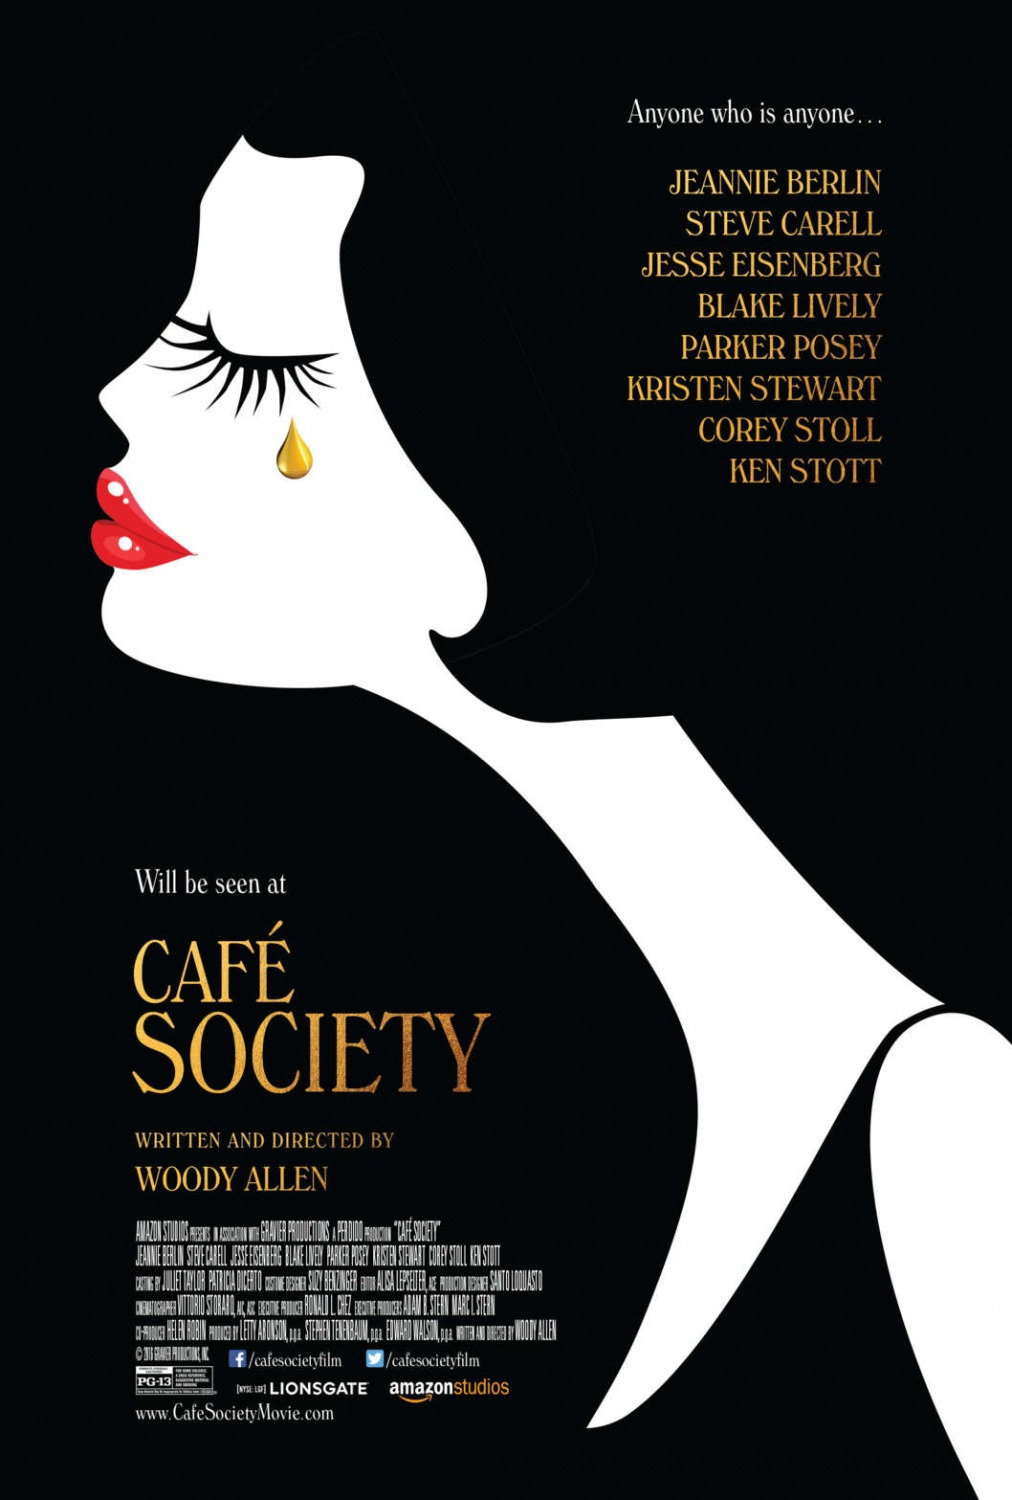 Cafe Society (2016) ณ ที่นั่นเรารักกัน Jesse Eisenberg